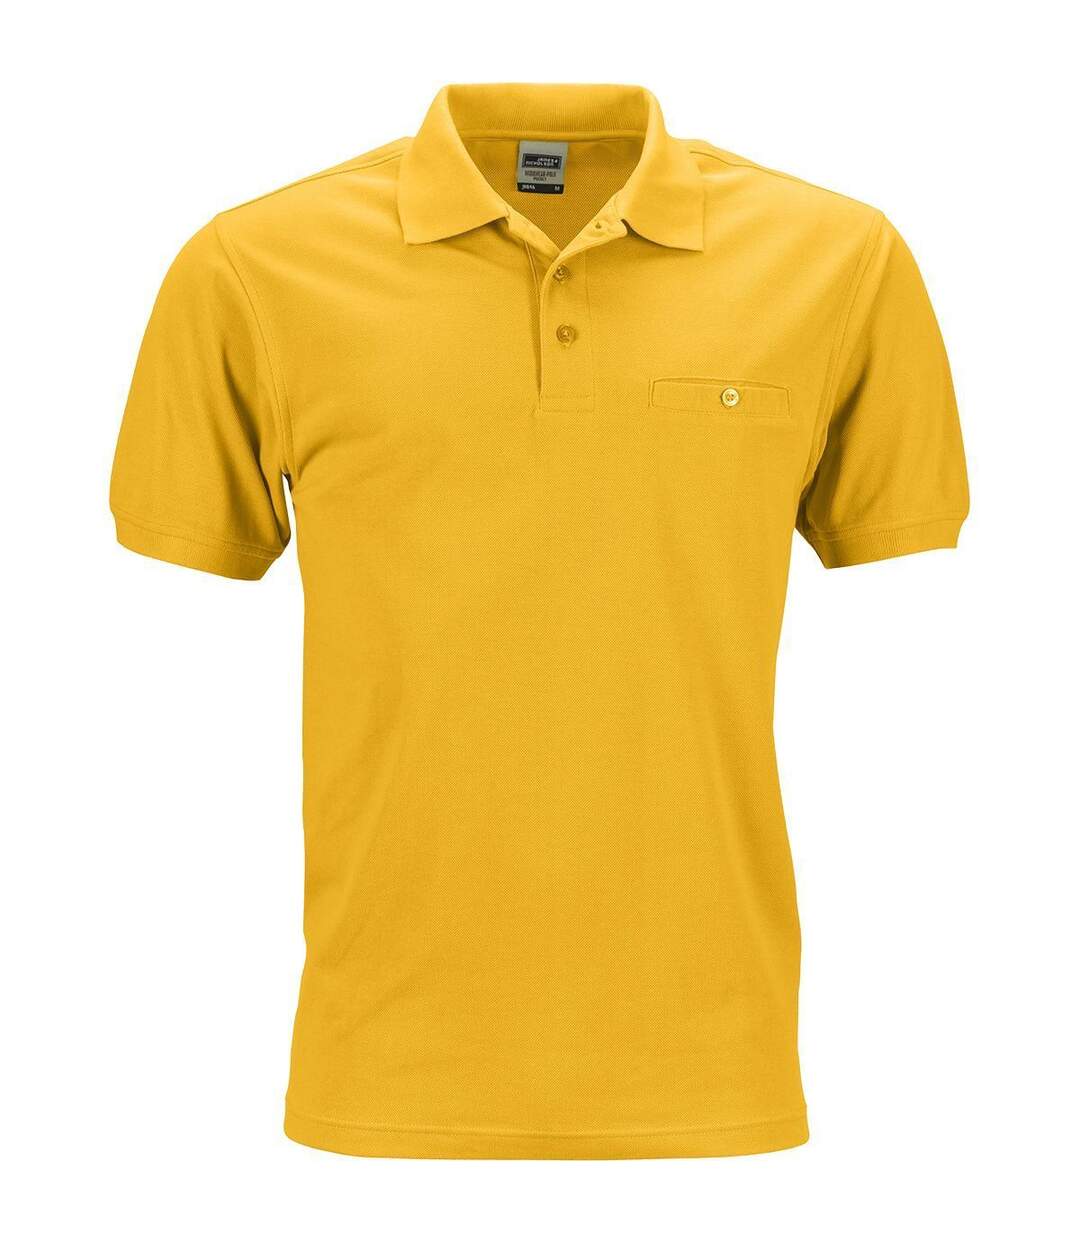 Polo homme poche poitrine - workwear - JN846 - jaune or